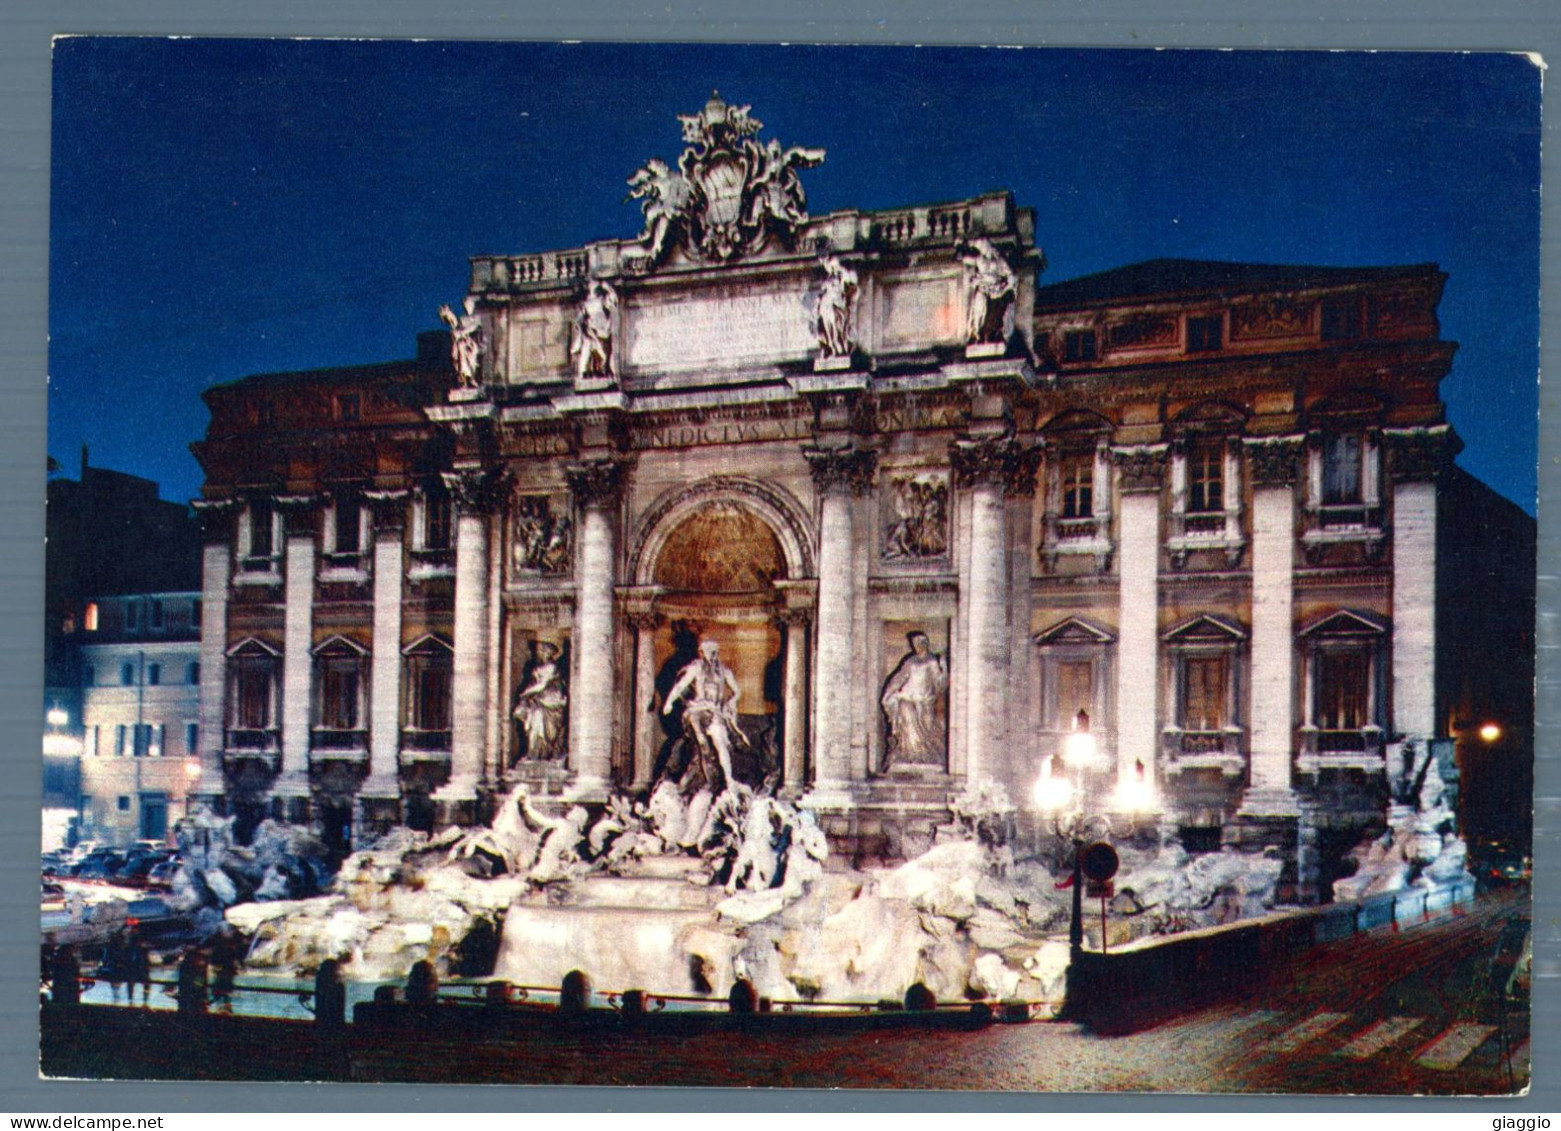 °°° Cartolina - Roma N. 2994 Fontana Di Trevi Notturno Nuova °°° - Fontana Di Trevi